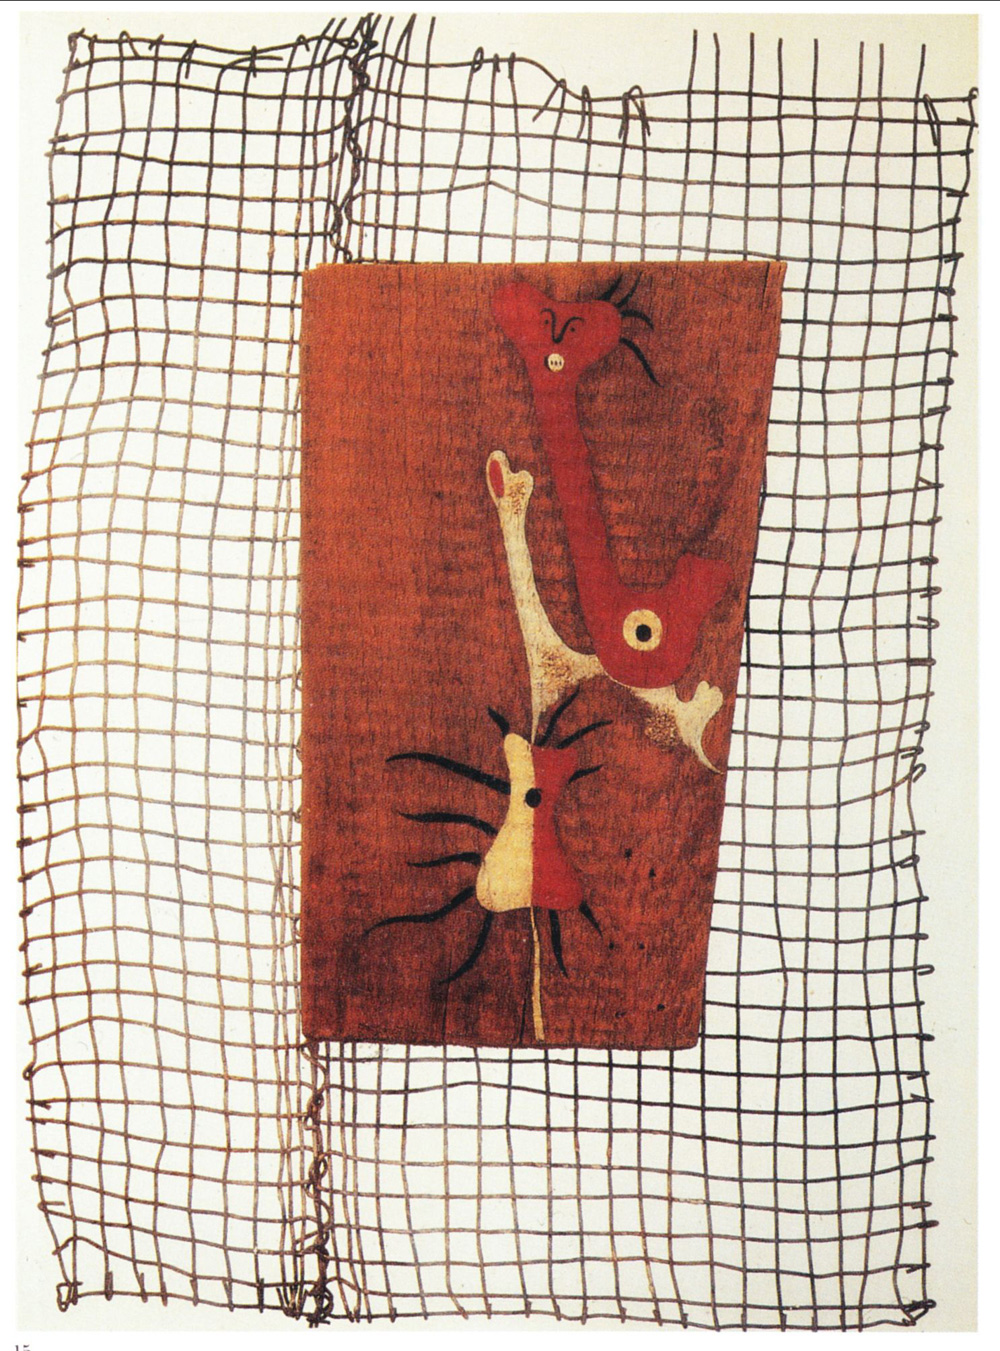 Joan Miró, Peinture-objet (1931; pittura bianca, pittura a olio e sabbia su tavola di legno fissata su griglia di ferro, 36 x 26 x 3 cm; Parigi, Centre Pompidou, Musée National d'art moderne) 